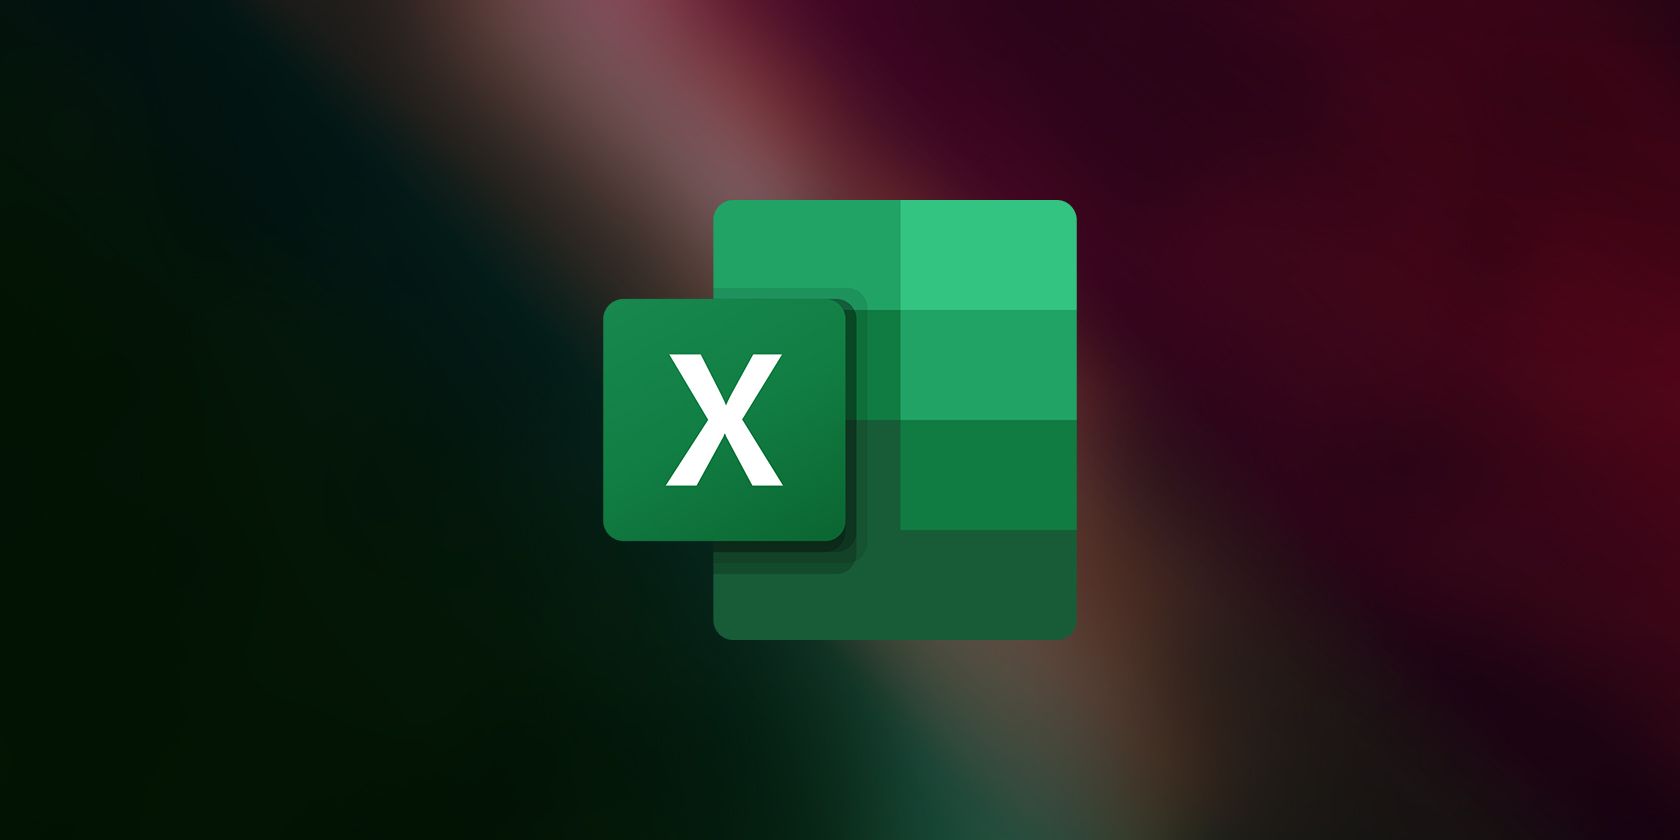 Excel logo on blurred background